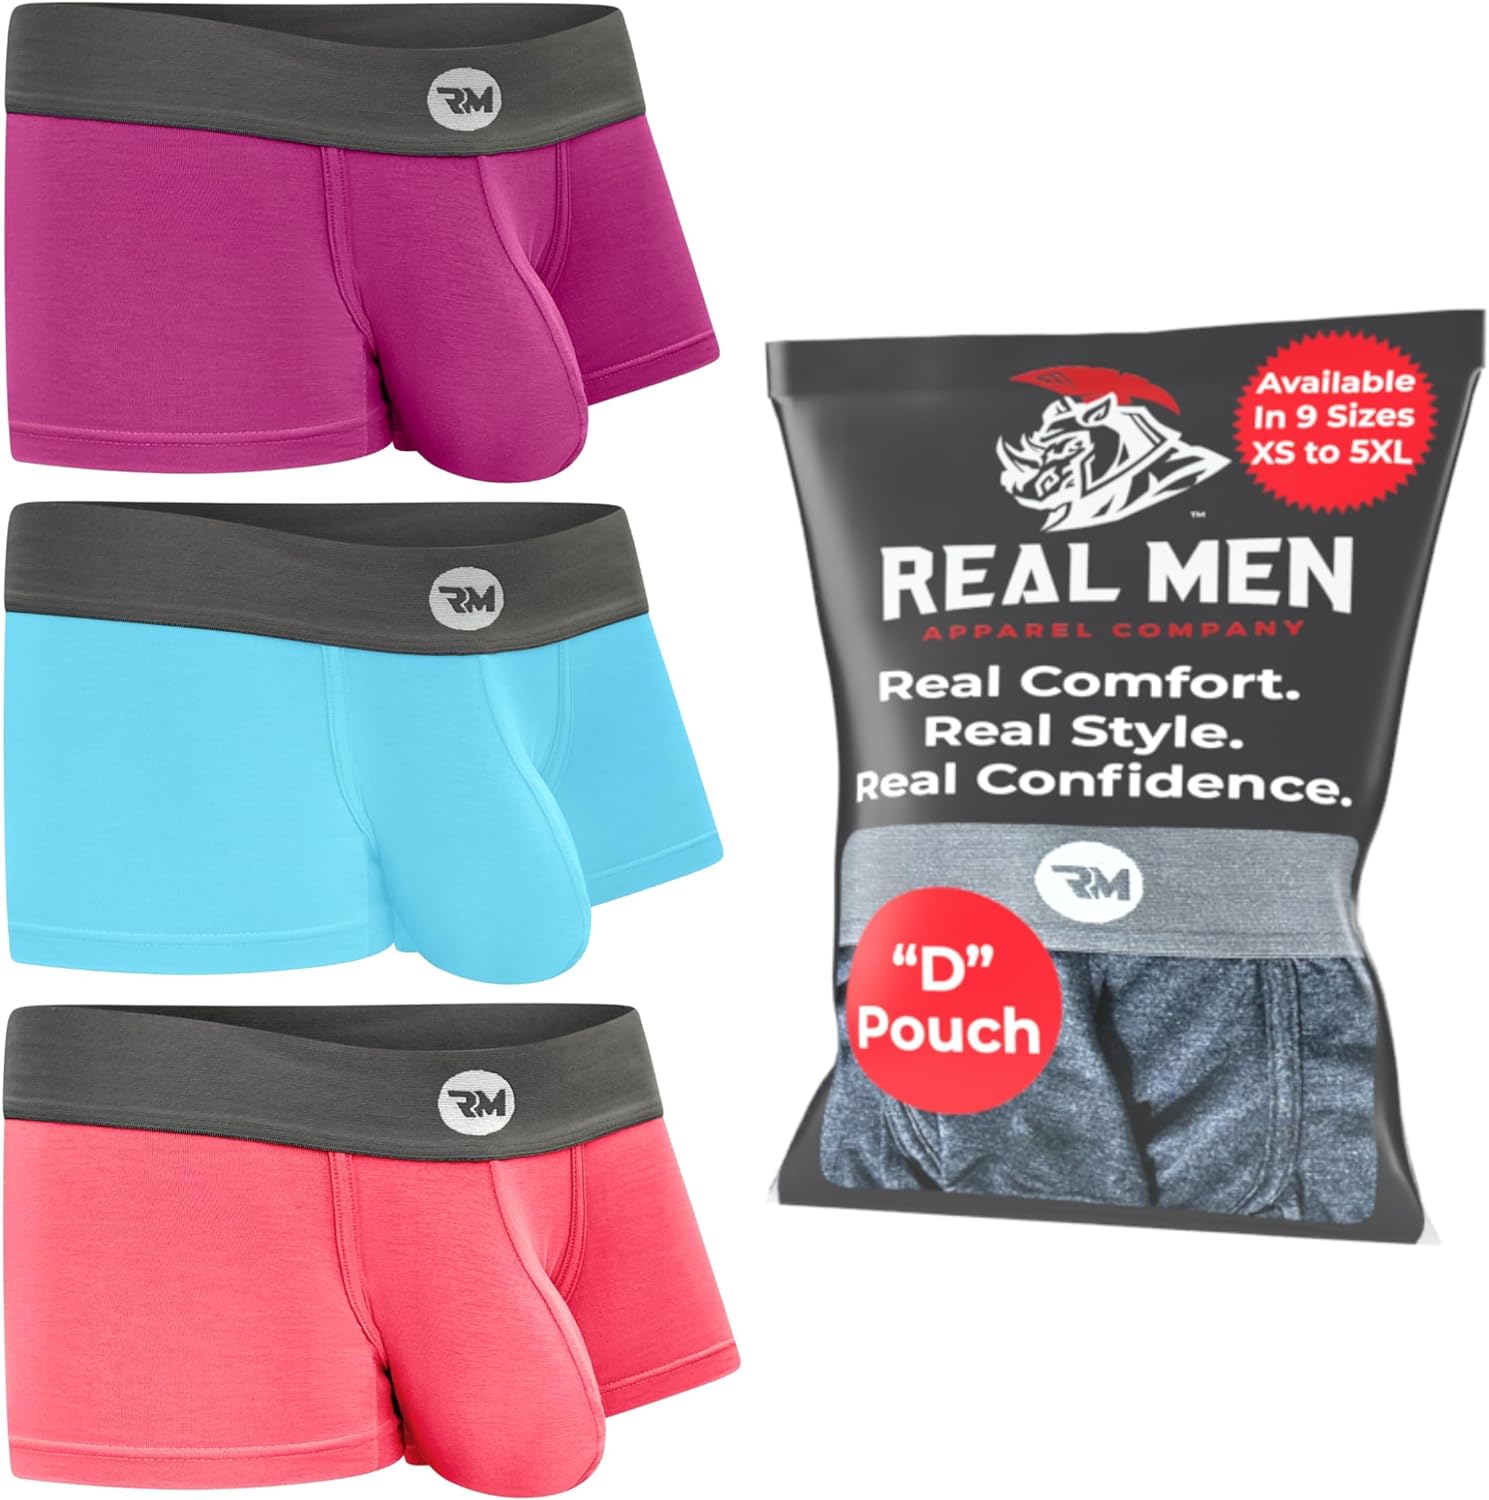  Men's Underwear - RM Real Men / Men's Underwear / Men's  Clothing: Clothing, Shoes & Jewelry